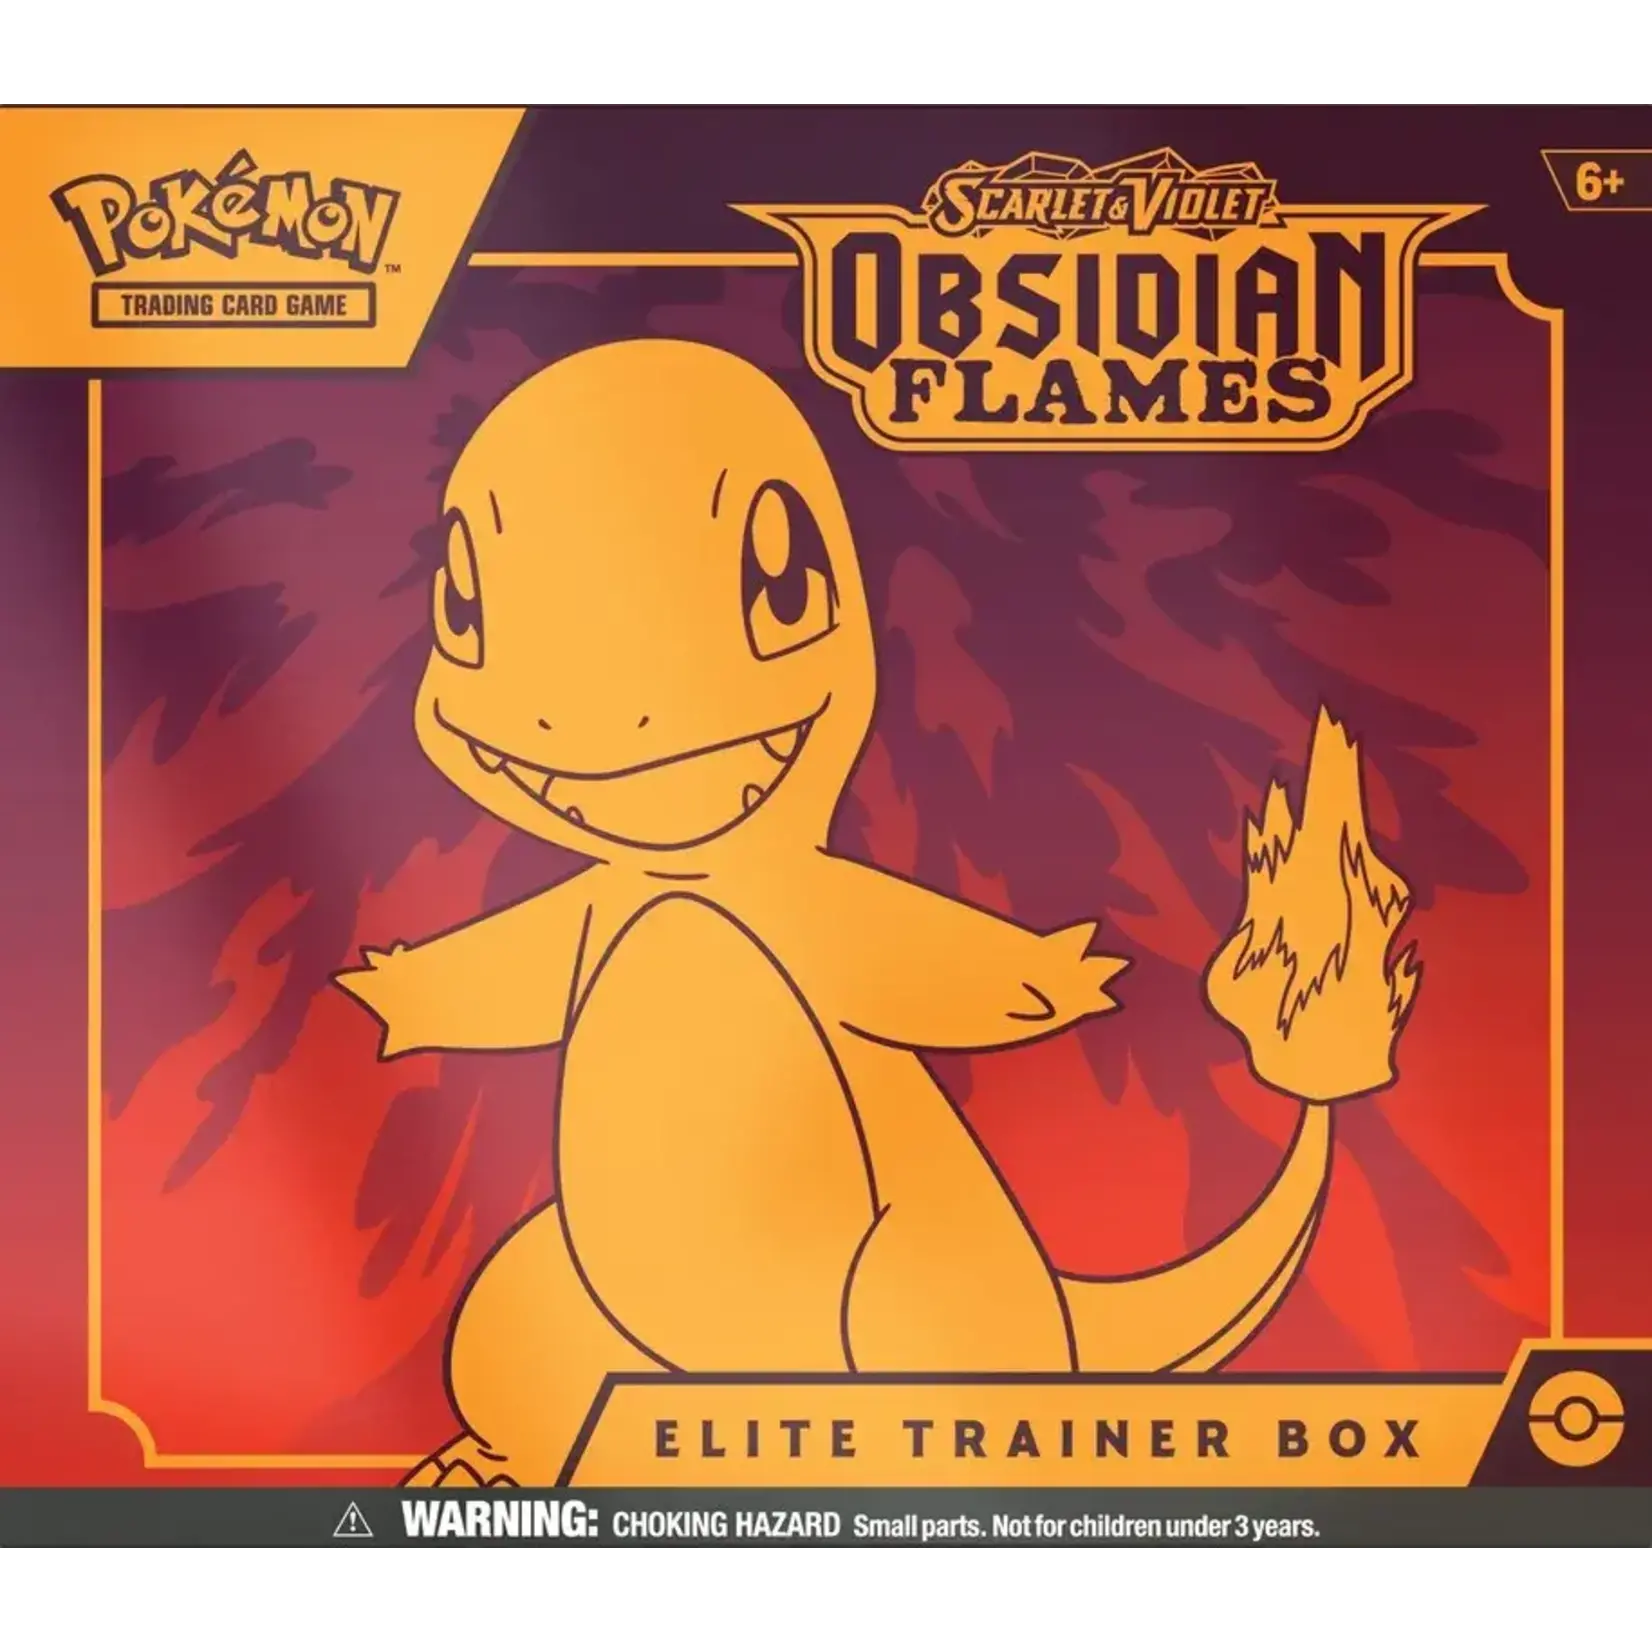 Pokémon Pokemon TCG: Scarlet & Violet 03 Obsidian Flames - Elite Trainer Box